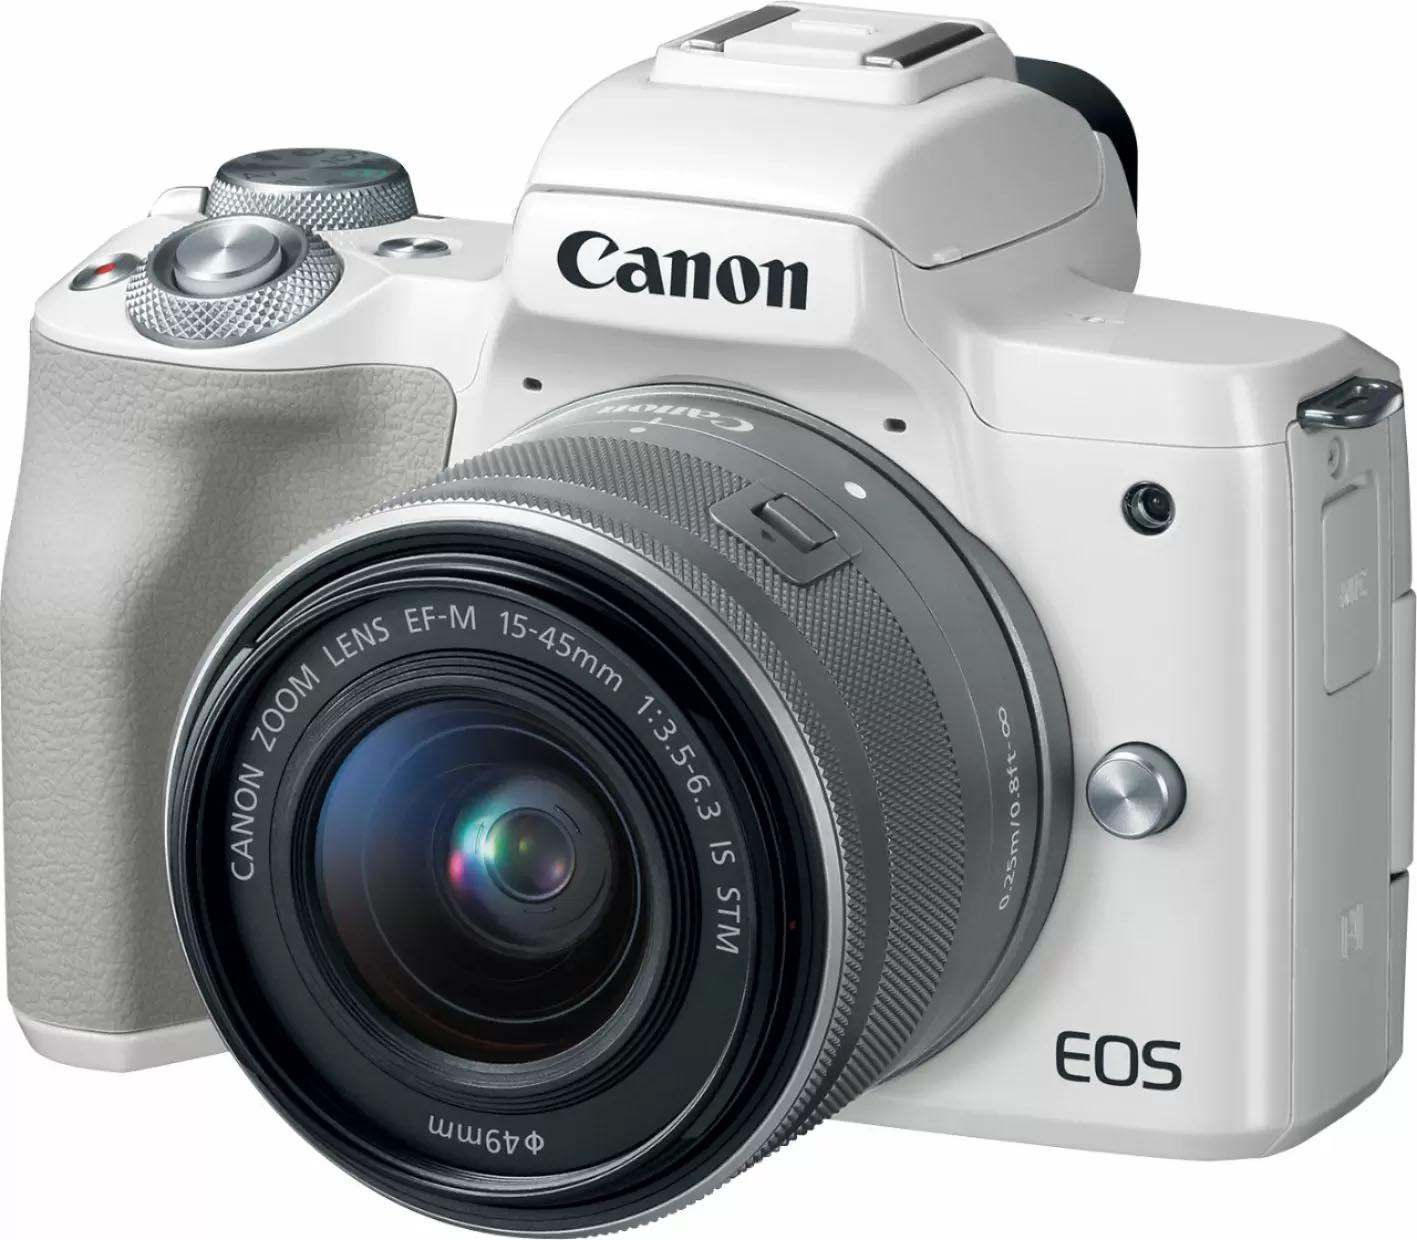 Canon M50 EF-M 15-45mm Digital Mirrorless Camera for $499.99